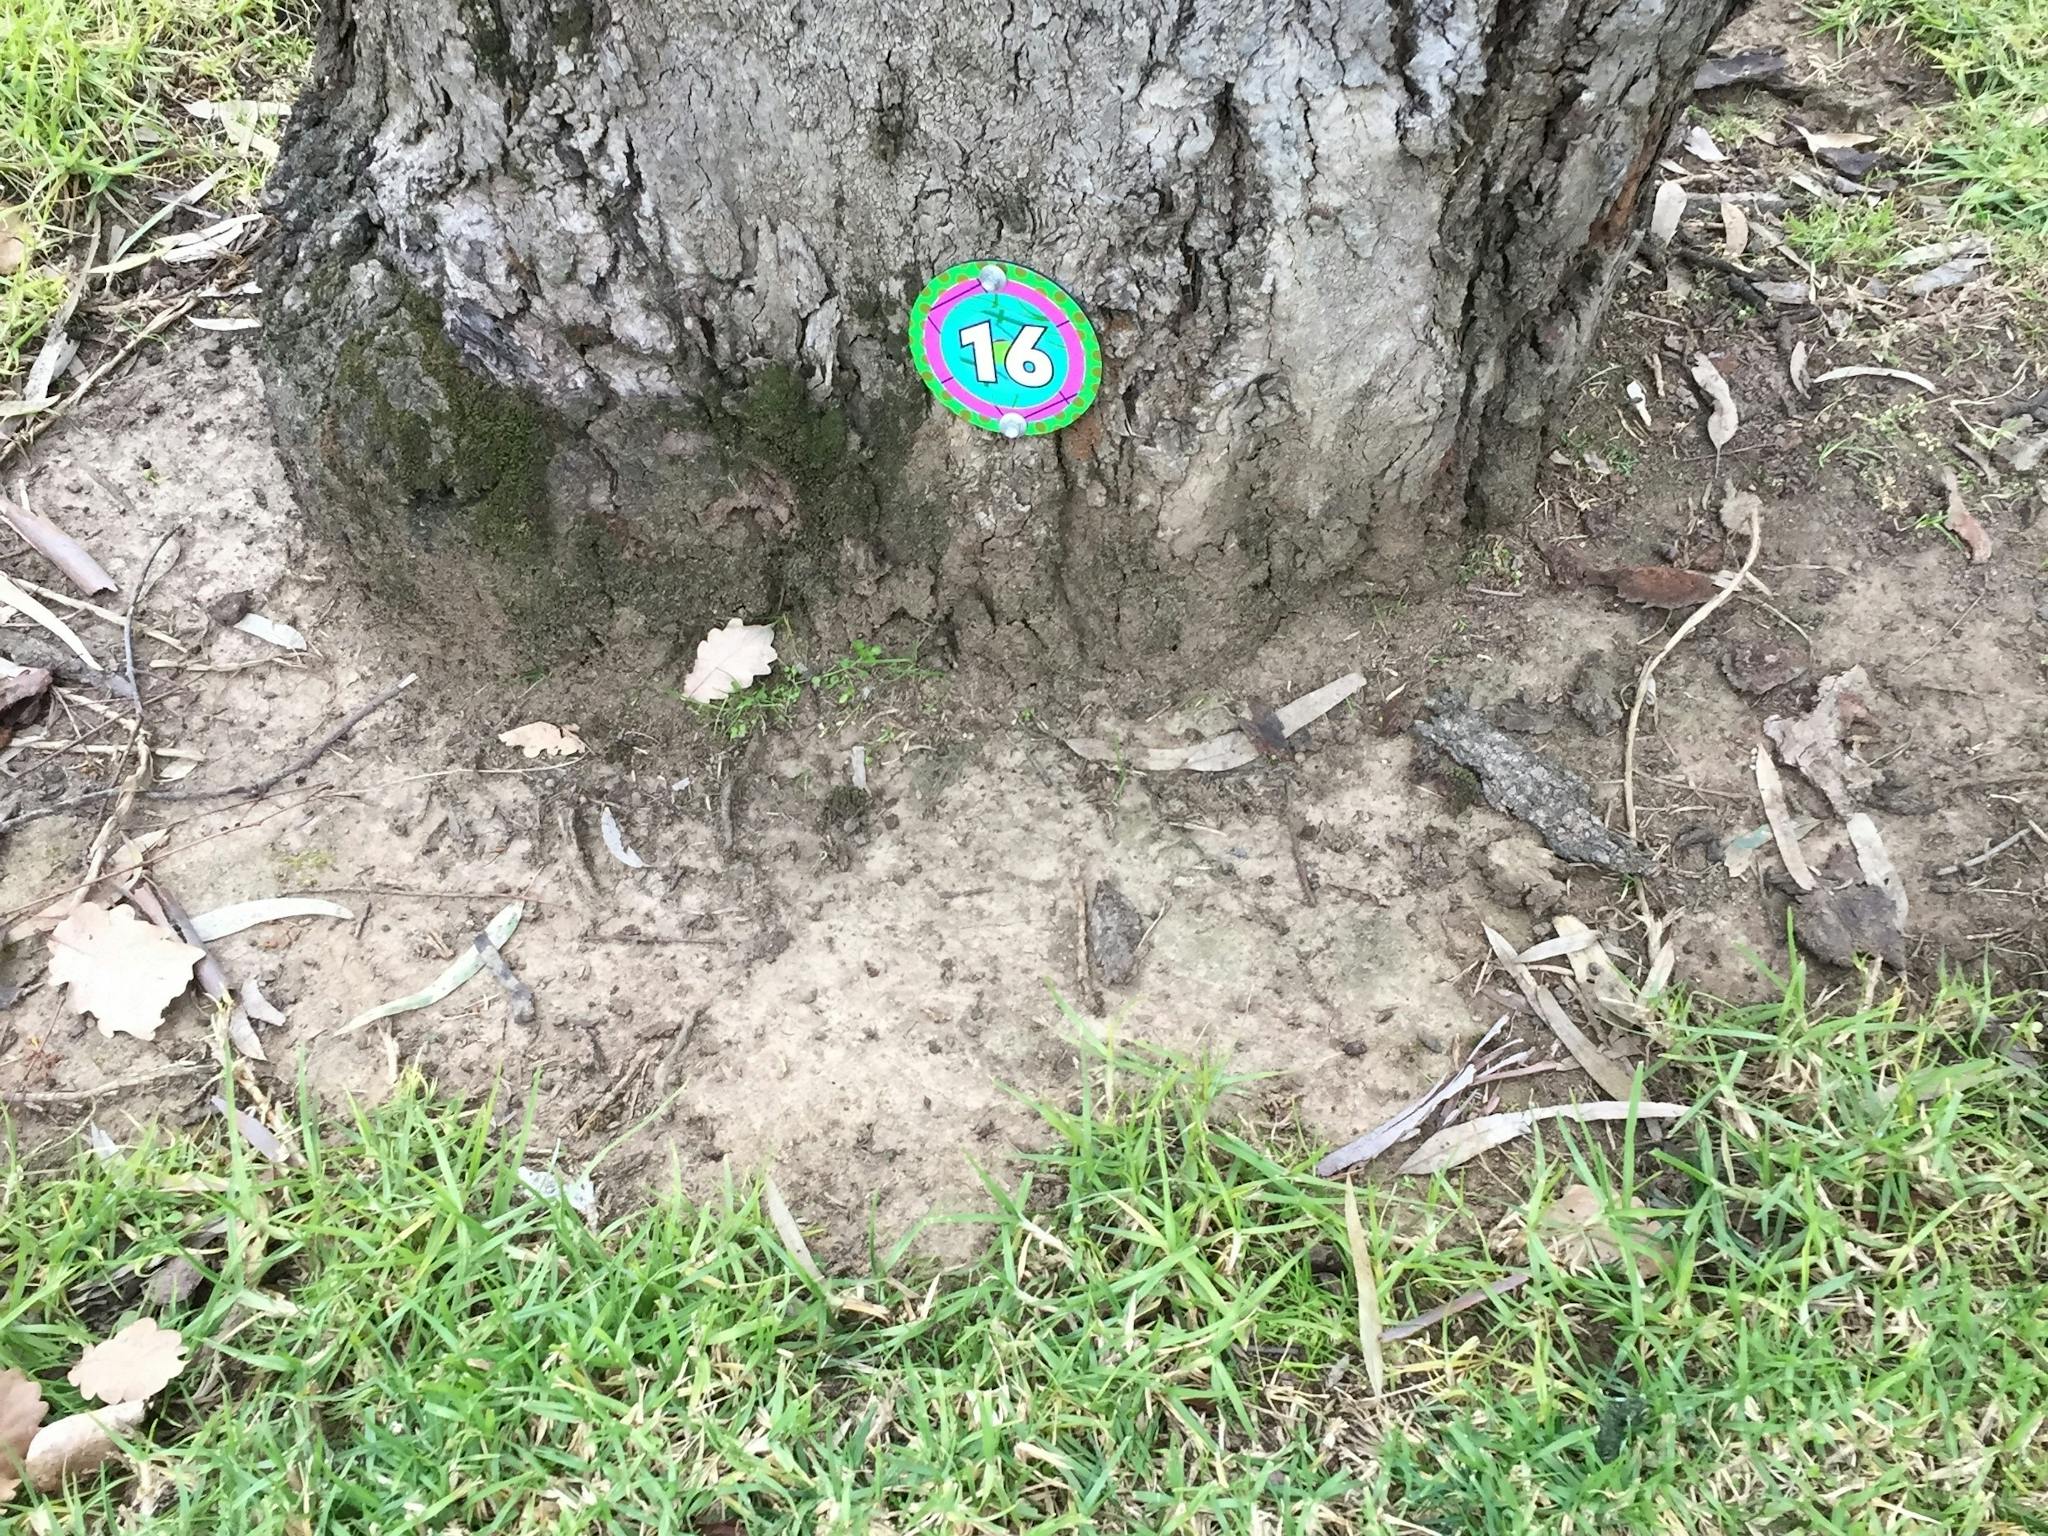 Hidden Creature Disc at bottom of Gum tree in Merriwa Park